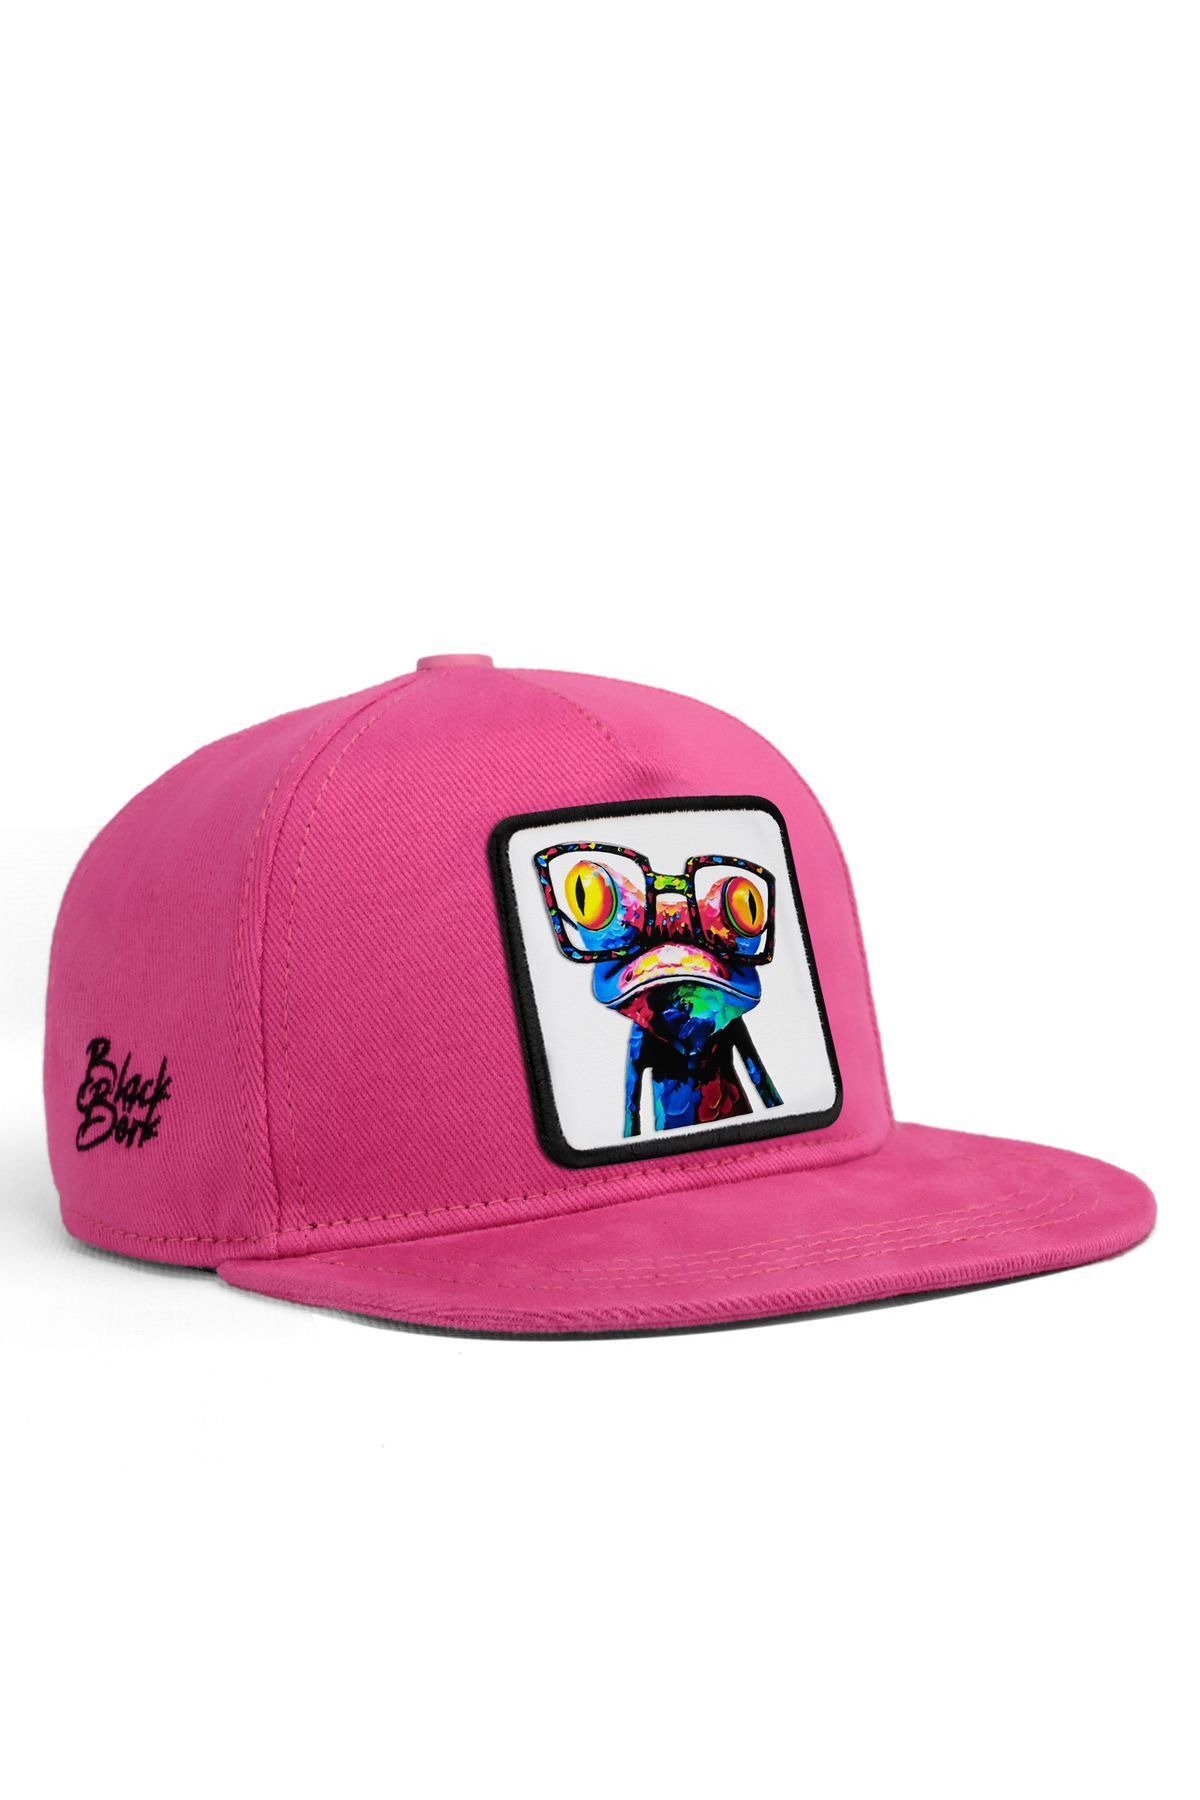 BlackBörk V1 Hip Hop Kids Bukalemun - 1bs Kod Logolu Unisex Pembe Çocuk Şapka (CAP)